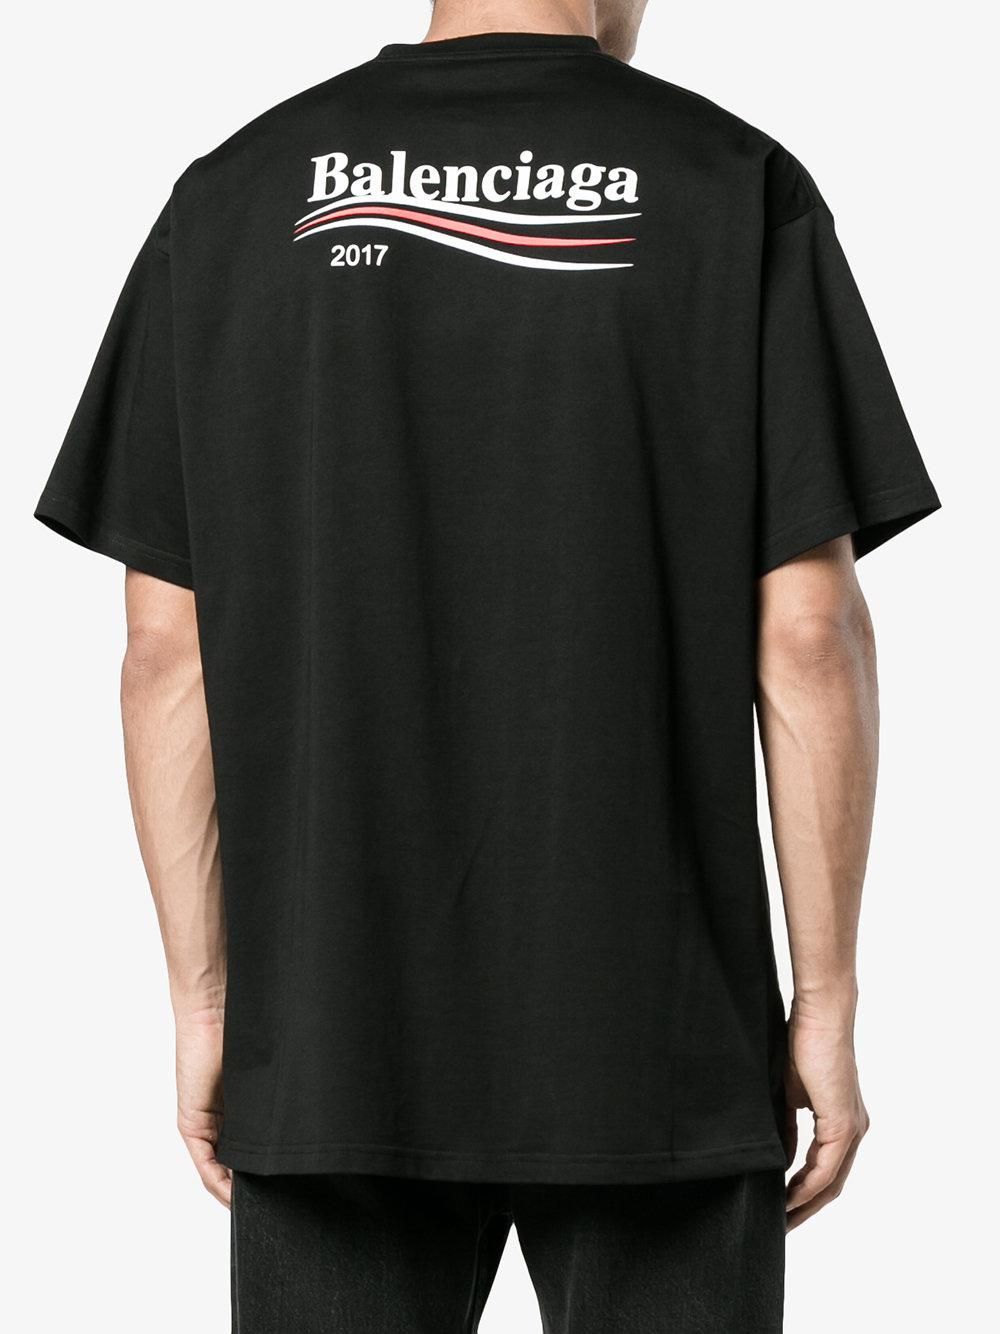 Balenciaga Oversize Logo T-shirt in Black for Men - Lyst